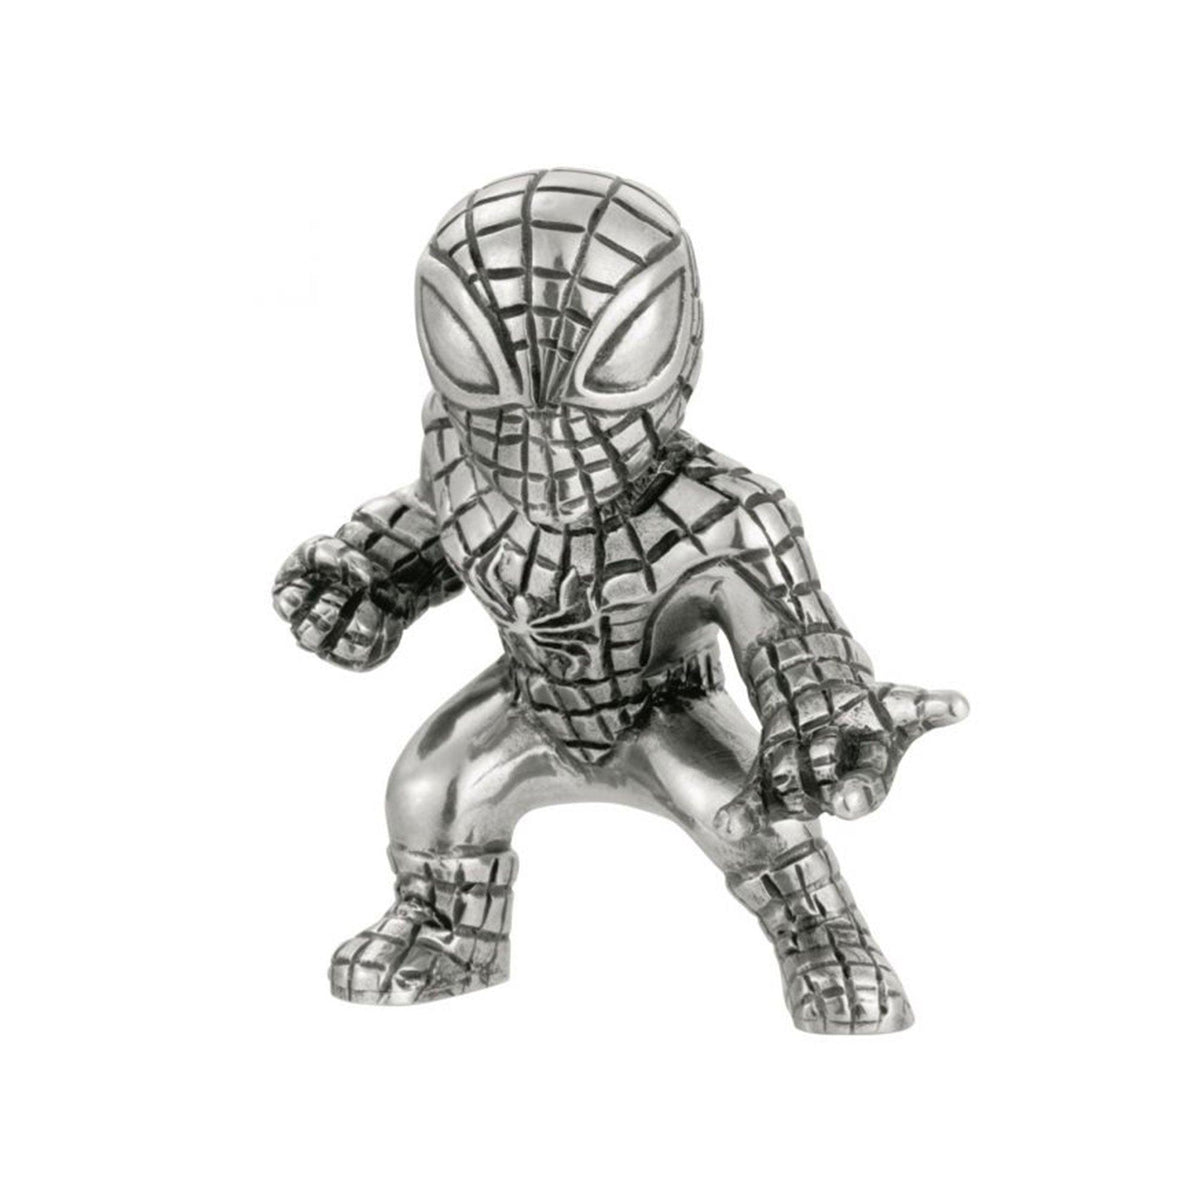 Royal Selangor Mini Spiderman Figurine 017968R - Wallace Bishop